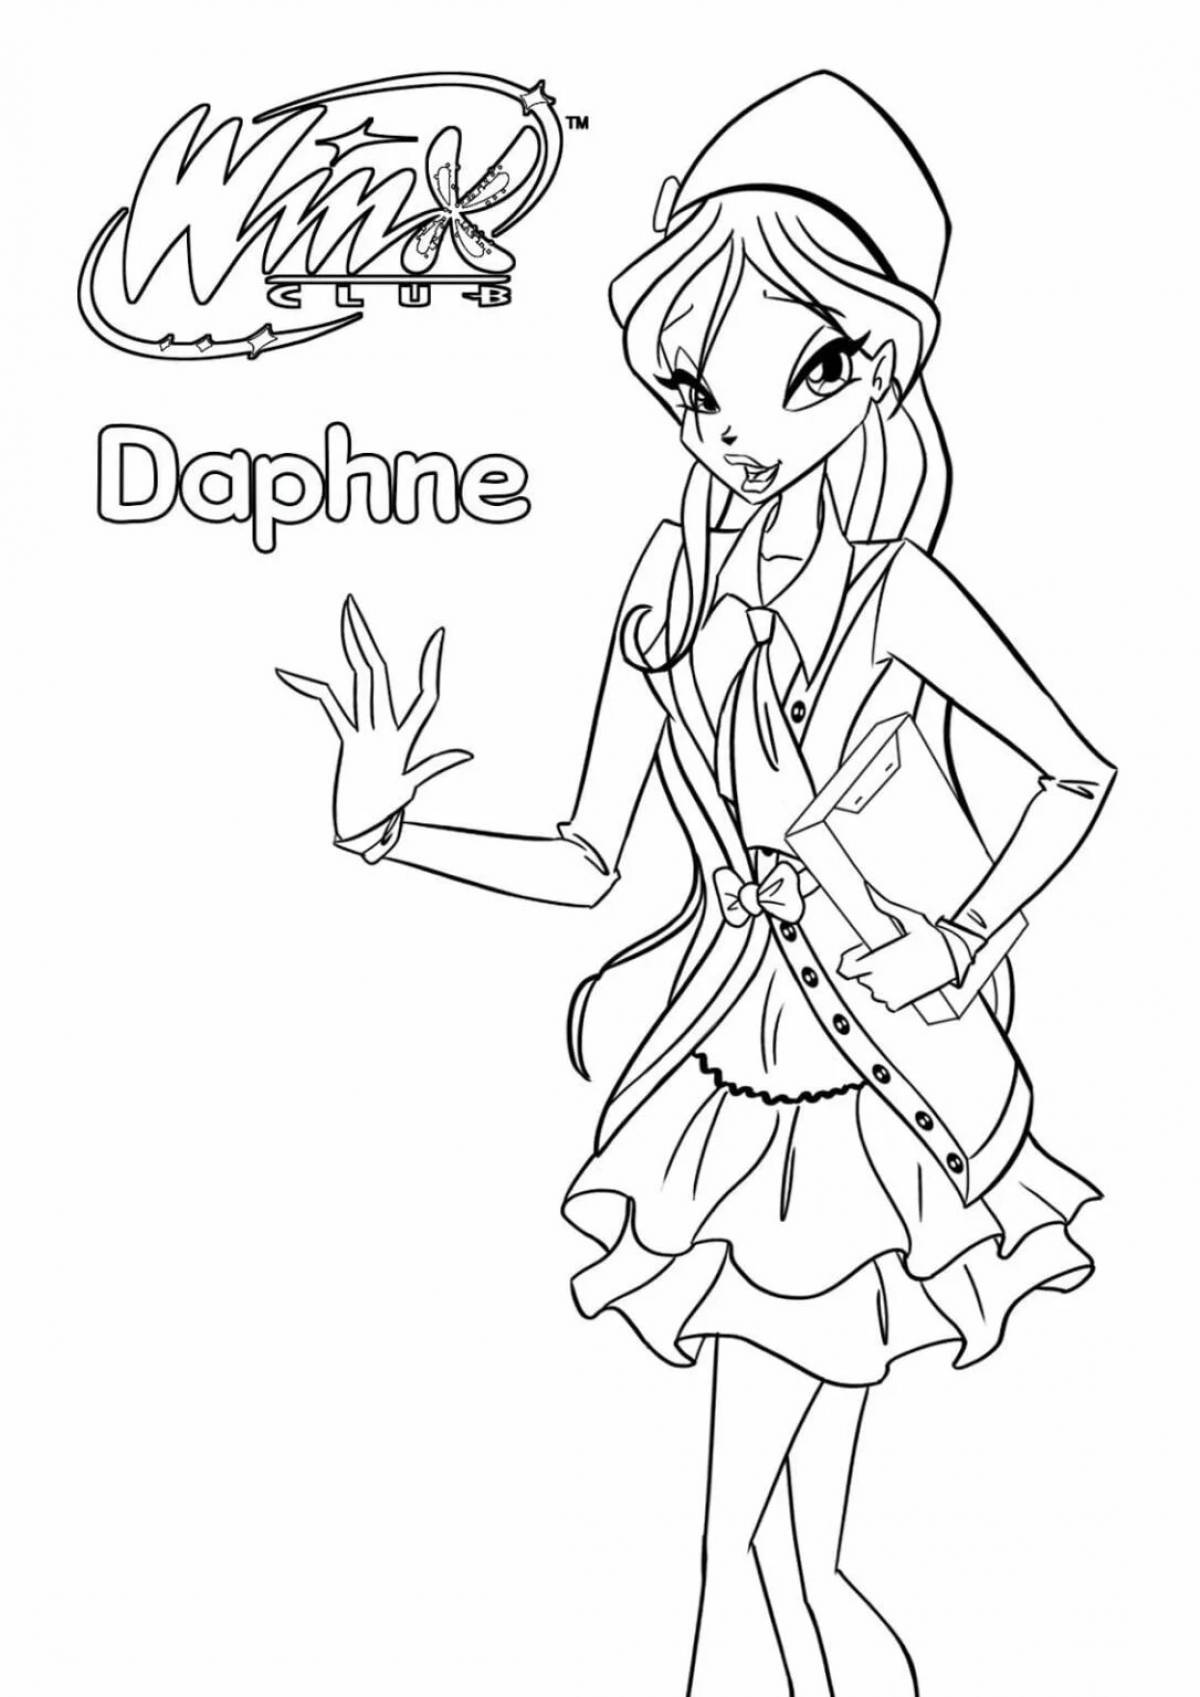 Daphne winx coloring page